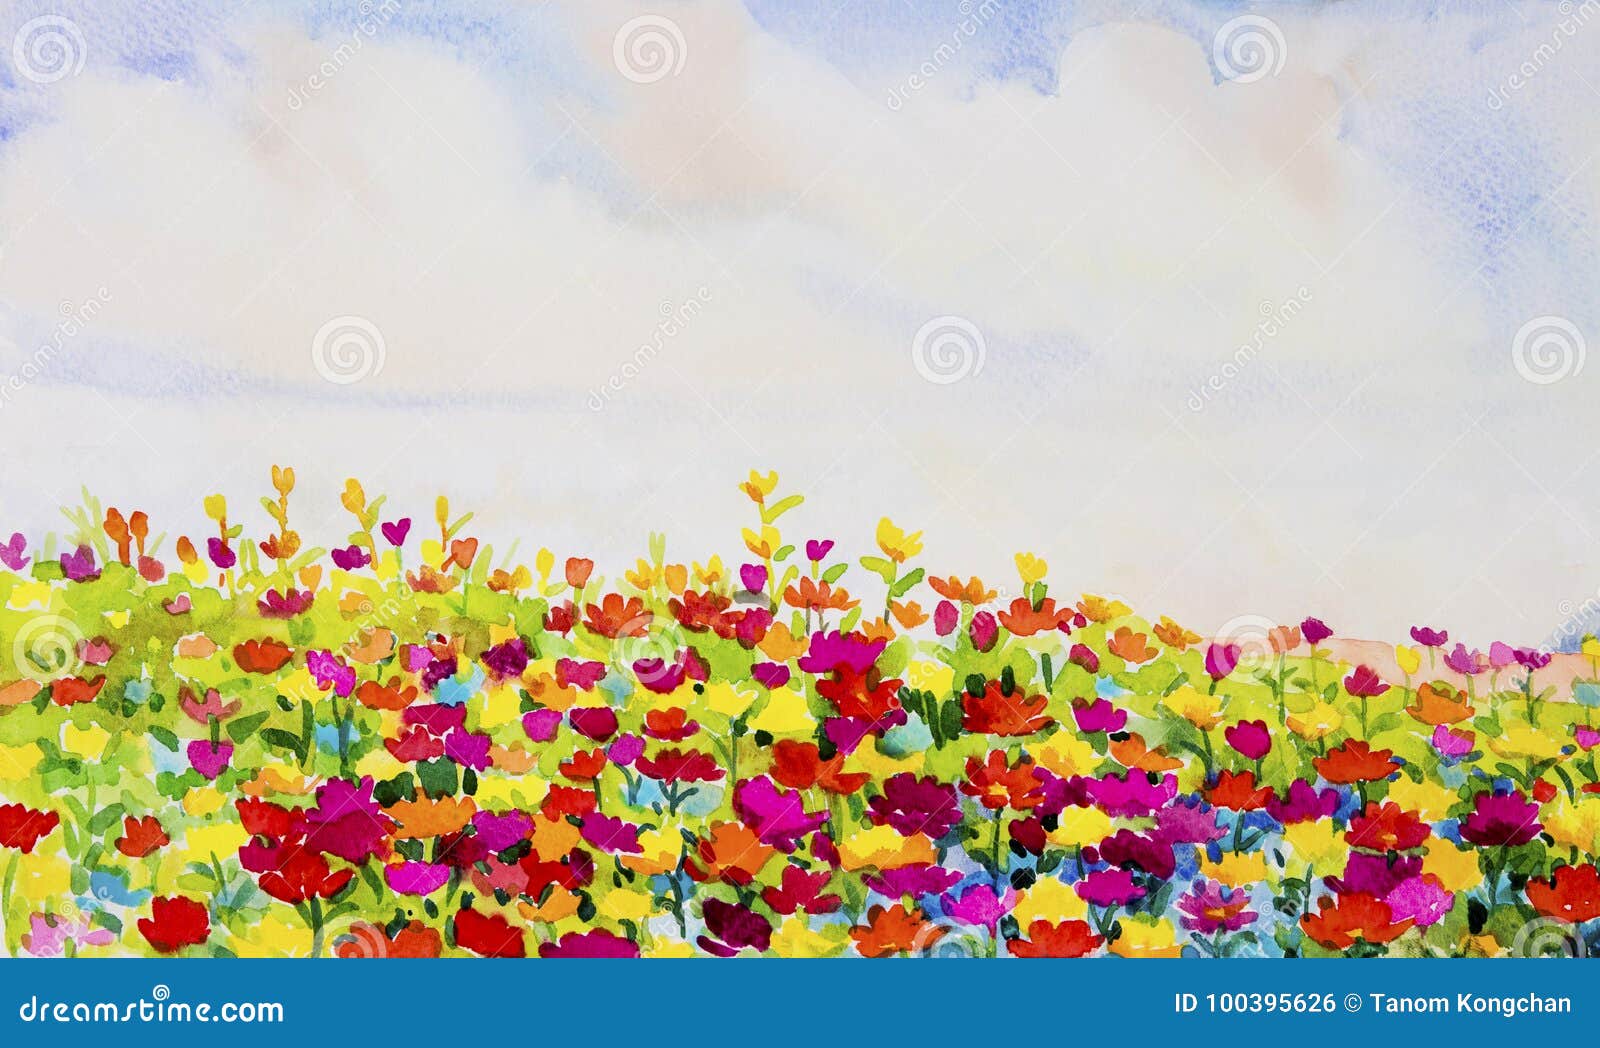 Painting Watercolor Landscape Daisy Flowers in Garden. Stock ...